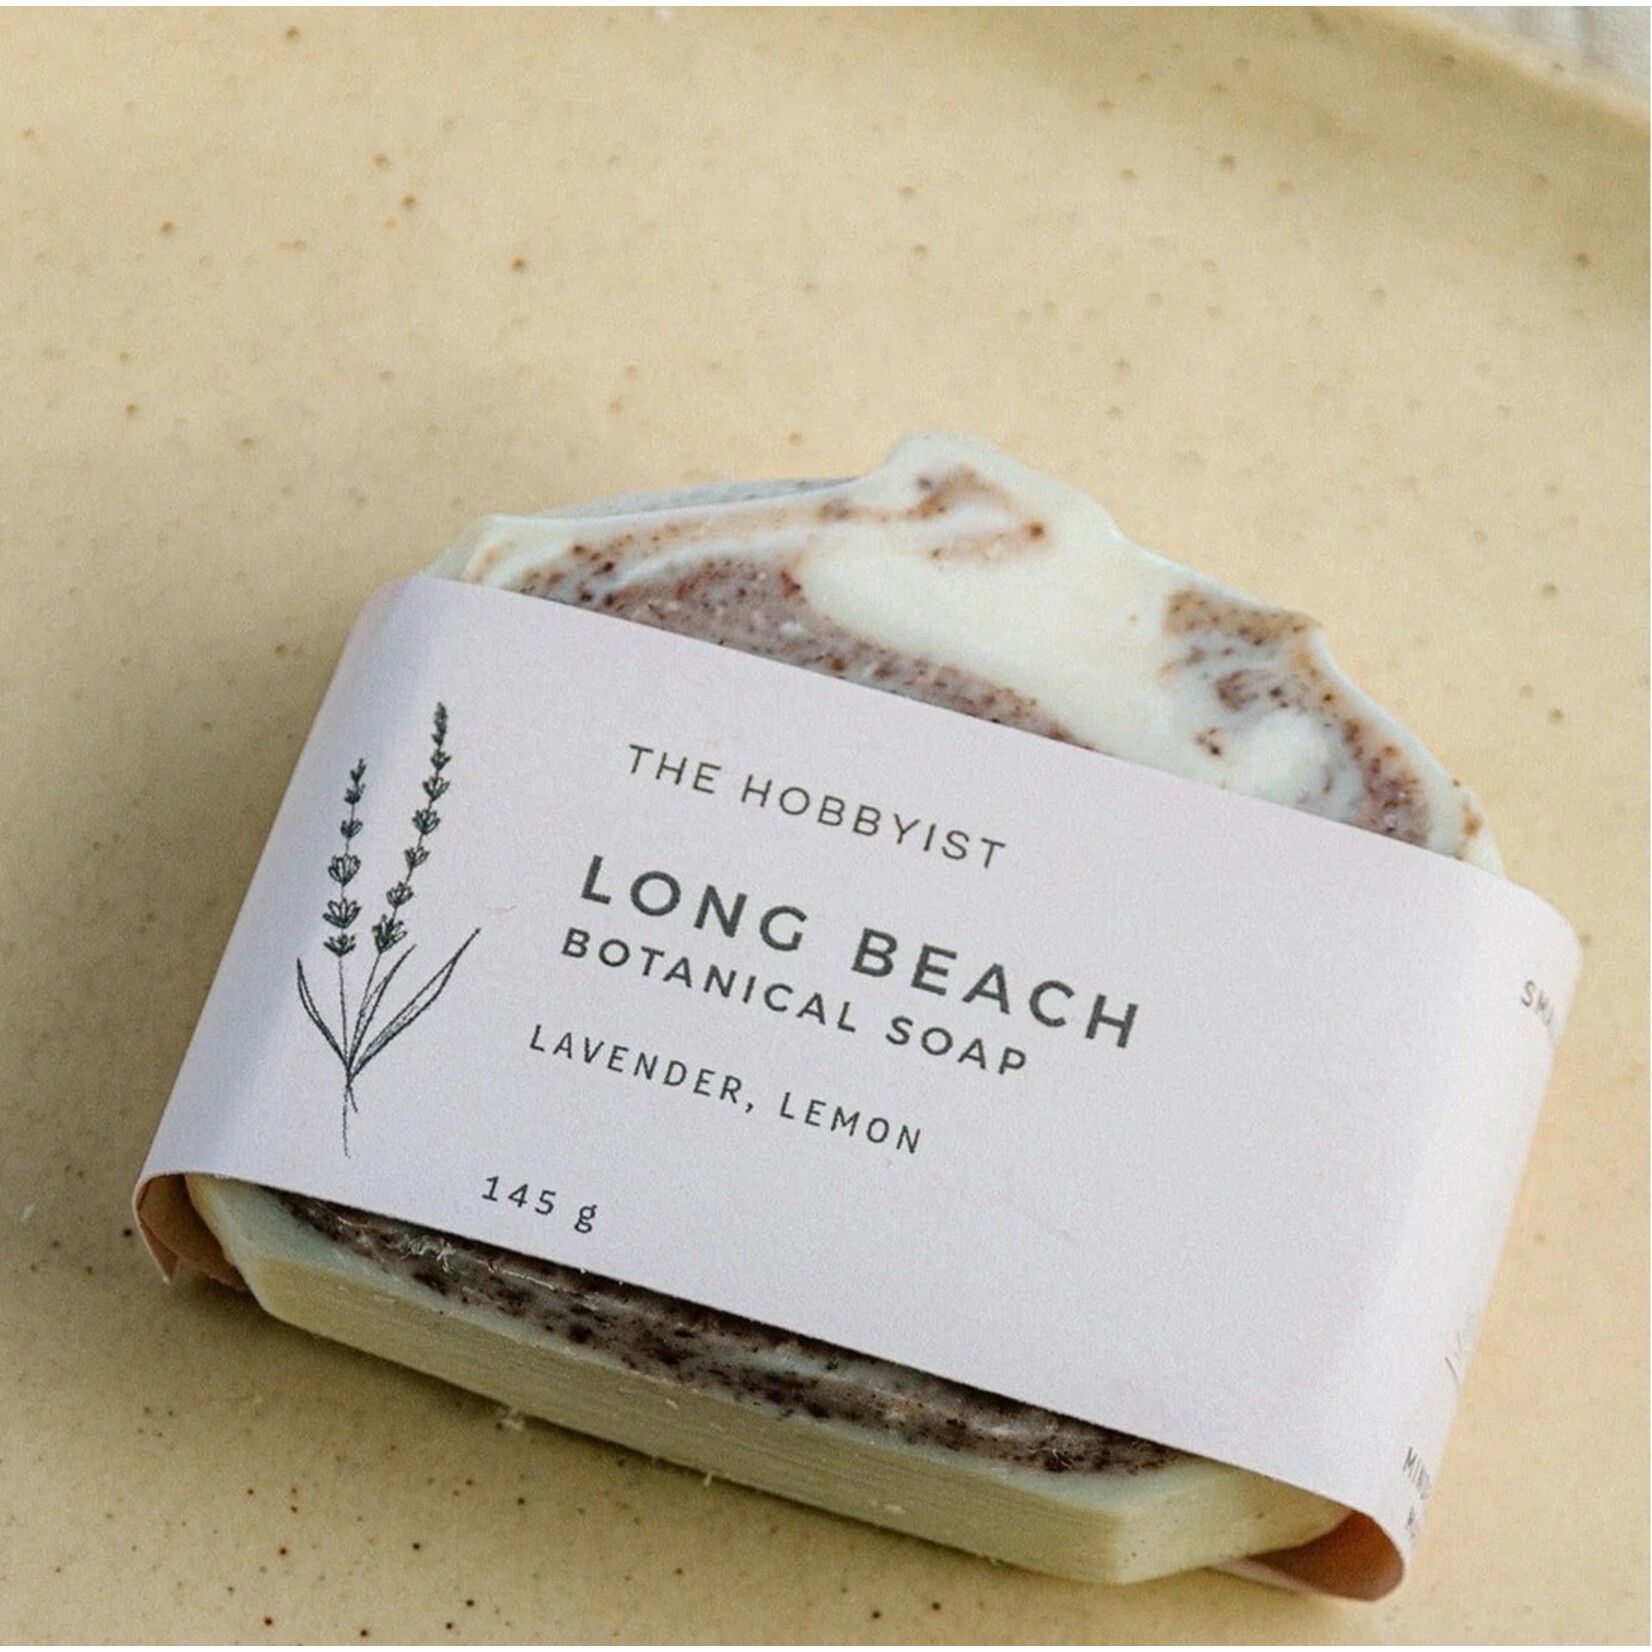 The Hobbyist Long Beach Botanical Soap